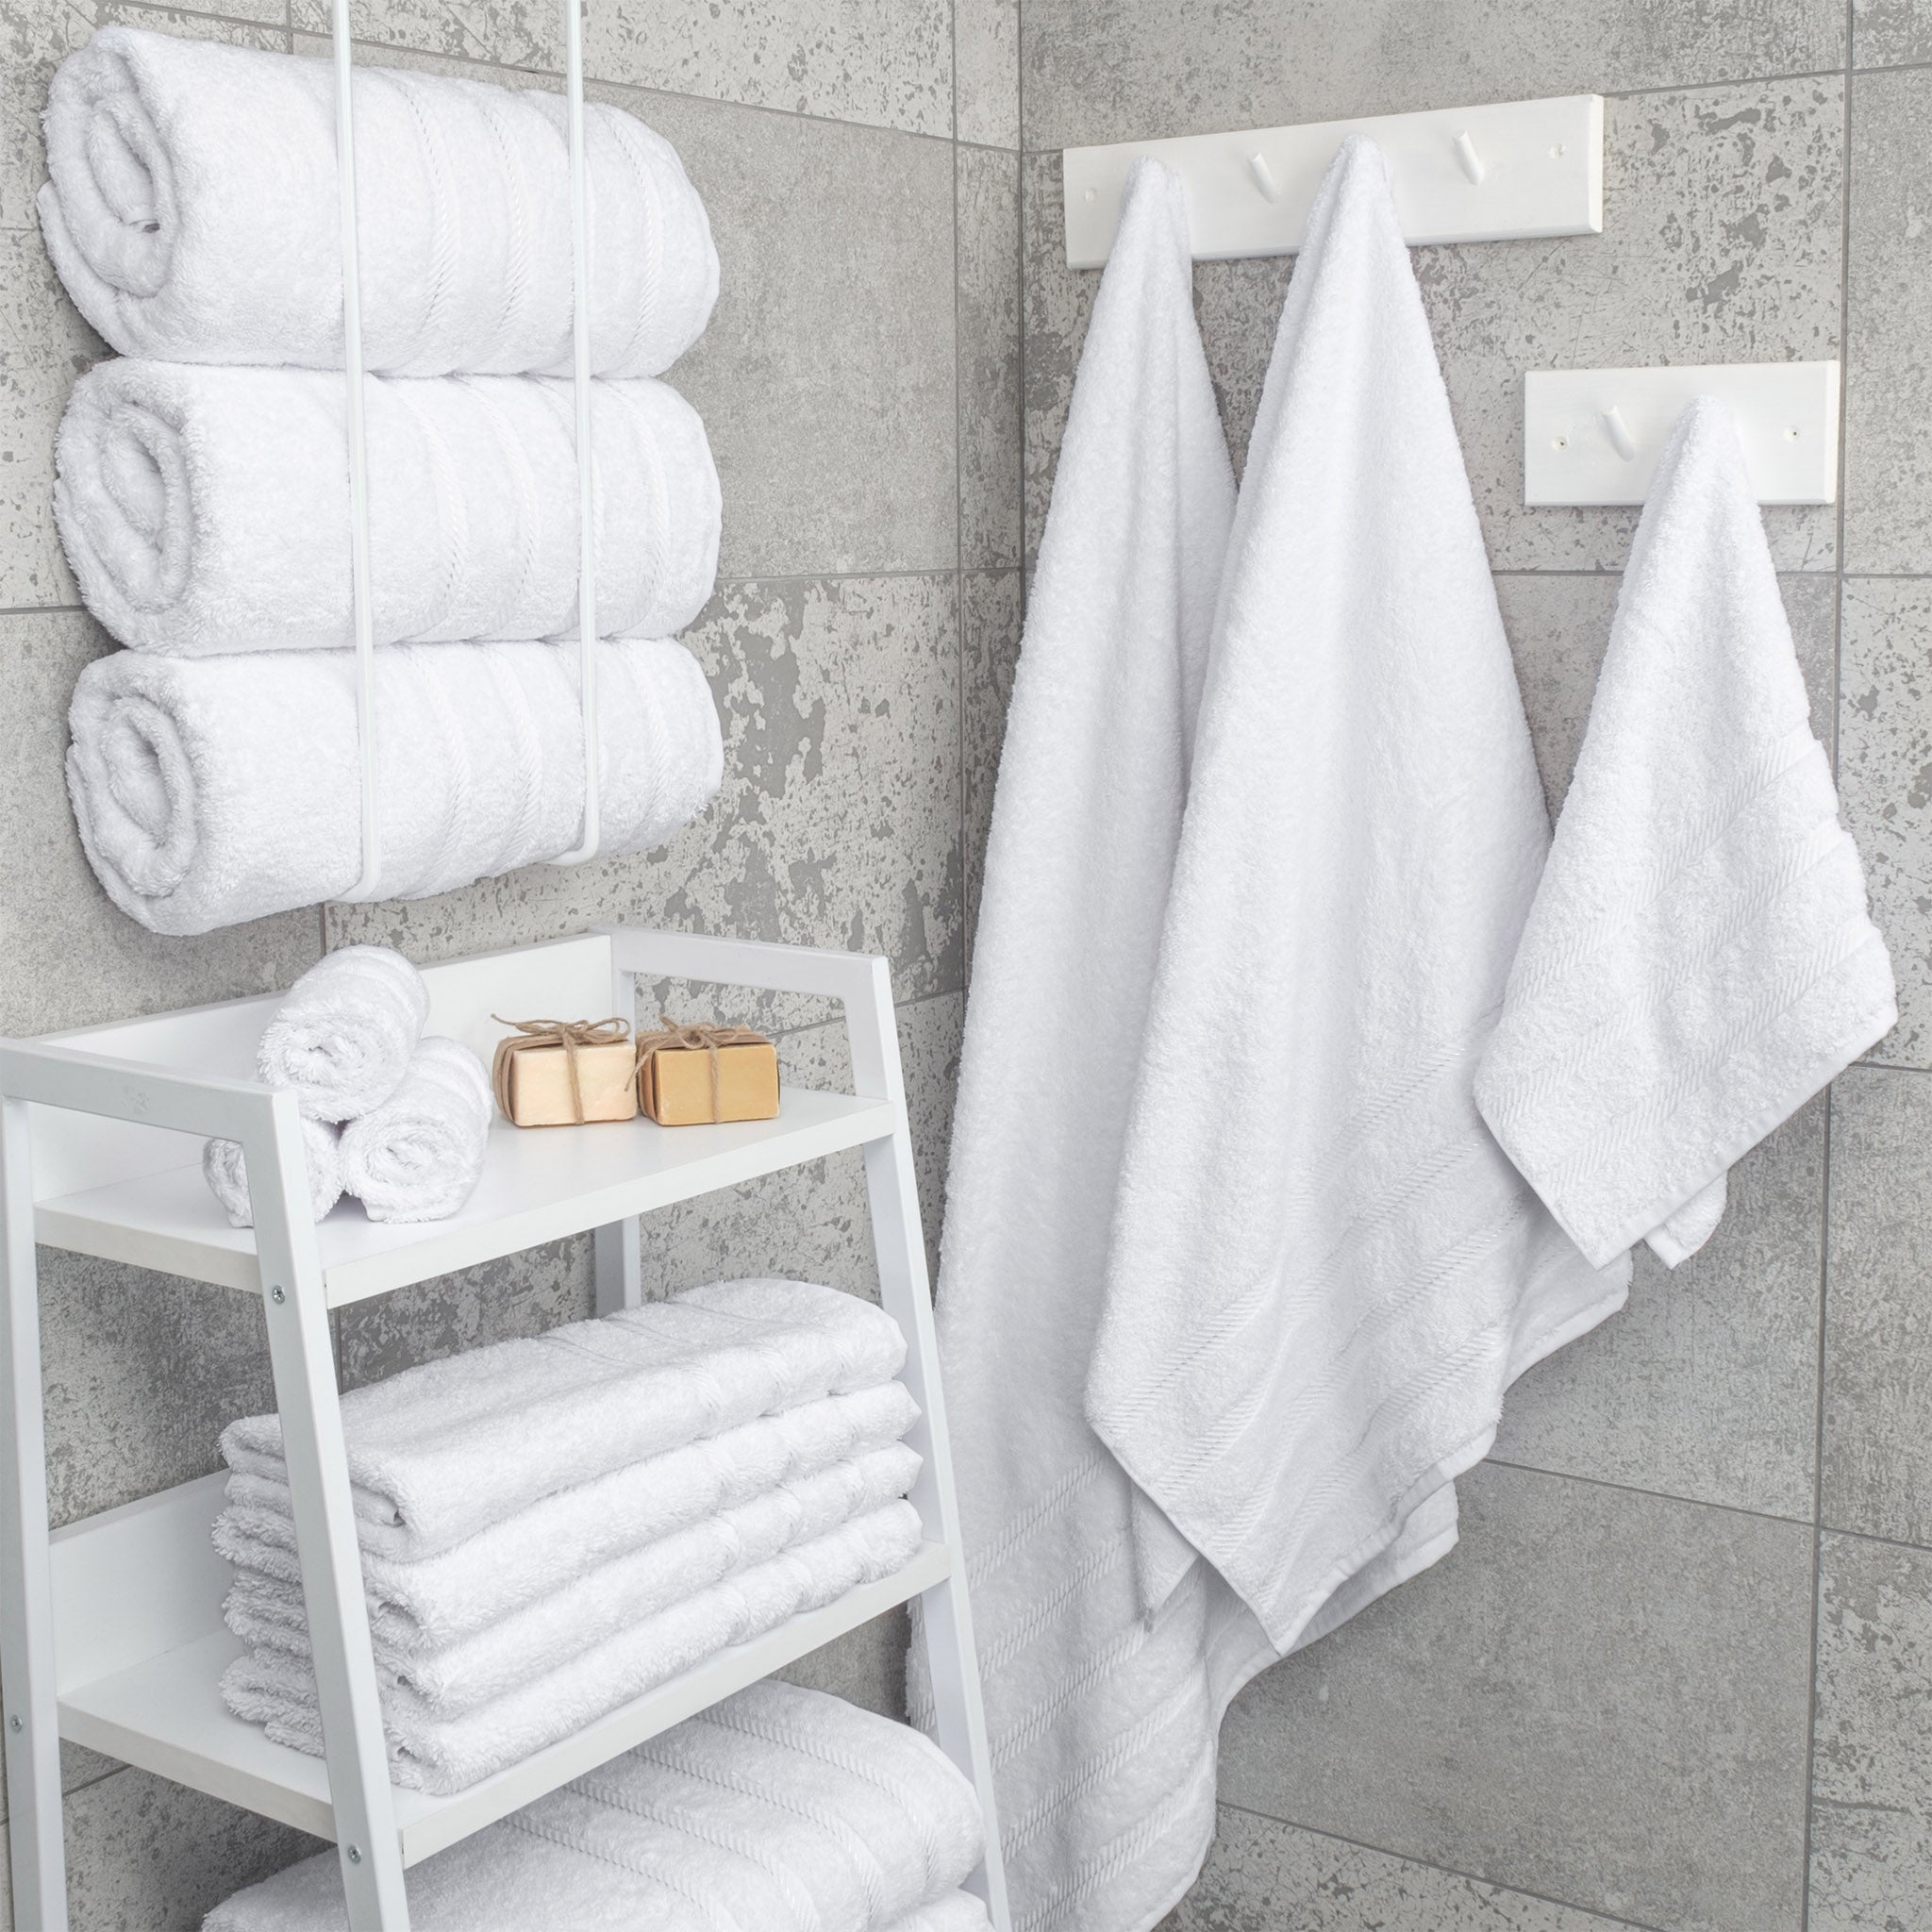 4 Pack Bath Towel Set, 100% Turkish Cotton Bath Towels for Bathroom, Super Soft, Extra Large Bath Towels Gray